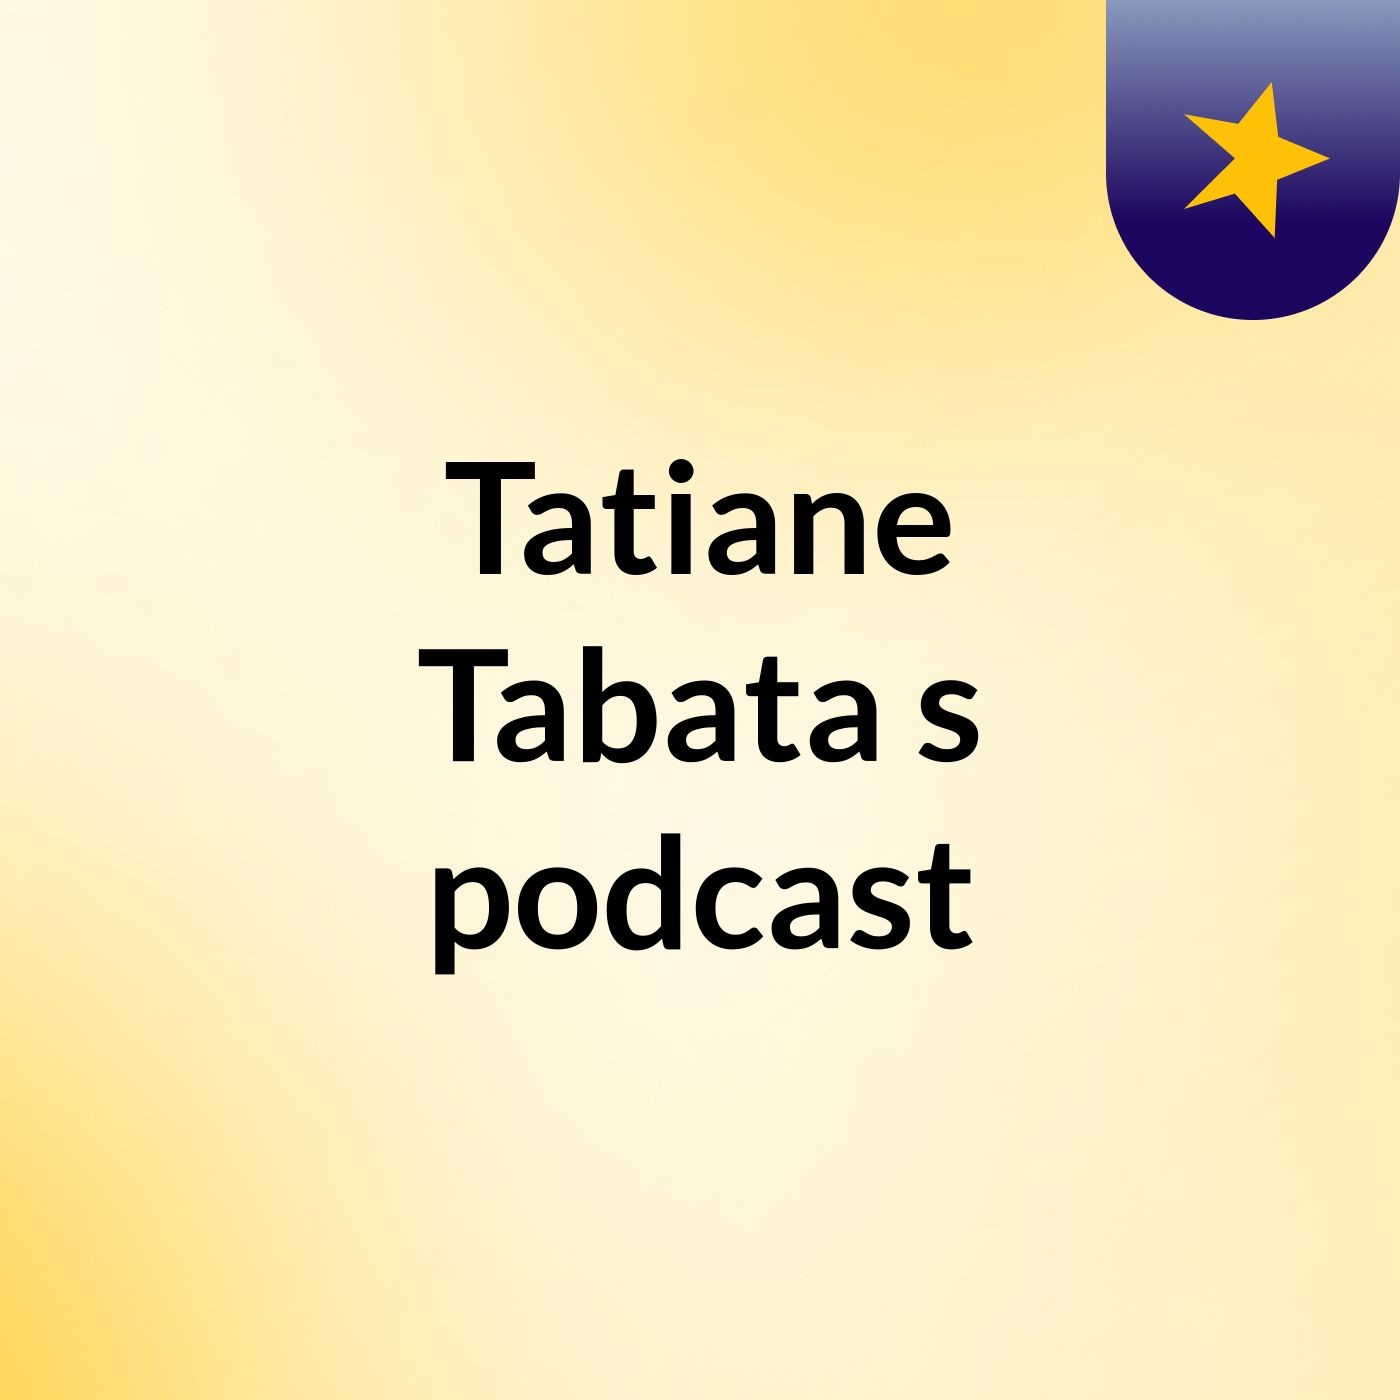 Tatiane Tabata's podcast